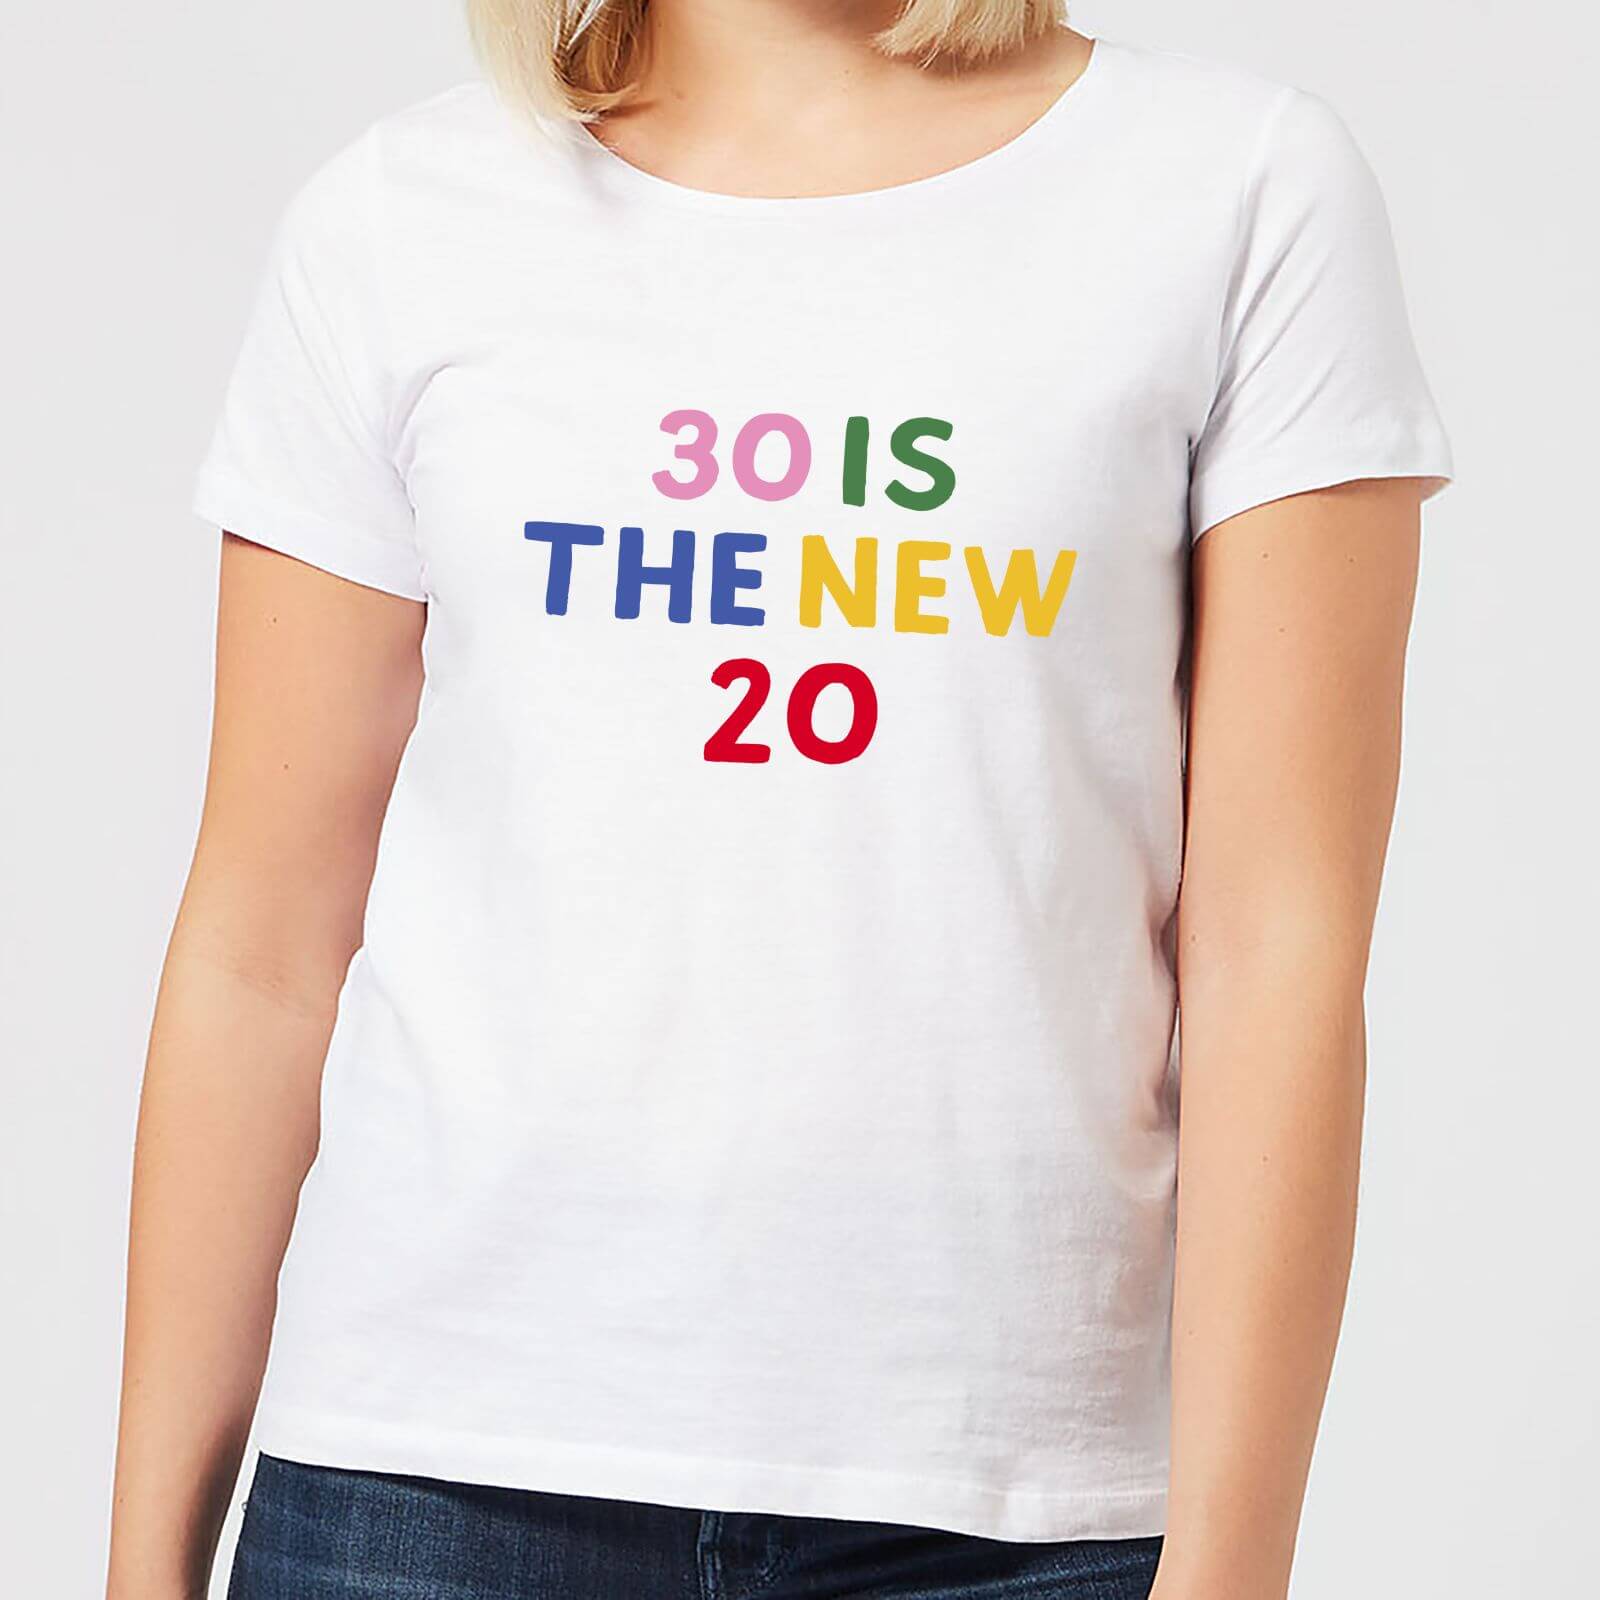 30 Is The New 20 Women's T-Shirt - White - XS - White